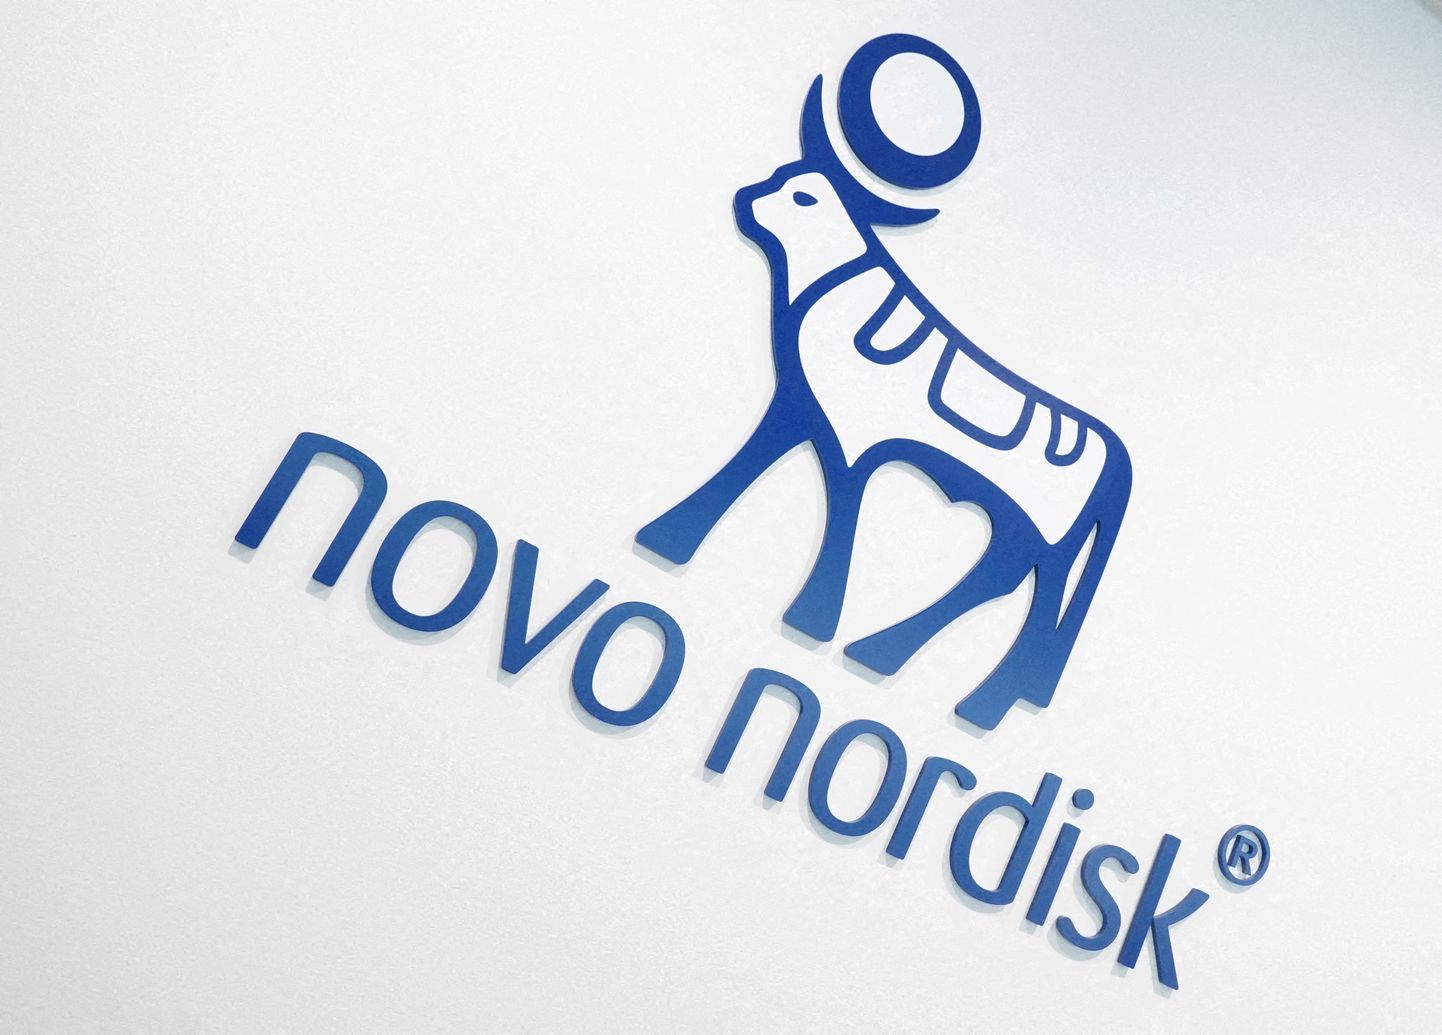 Taani ravimifirma Novo Nordiski logo.